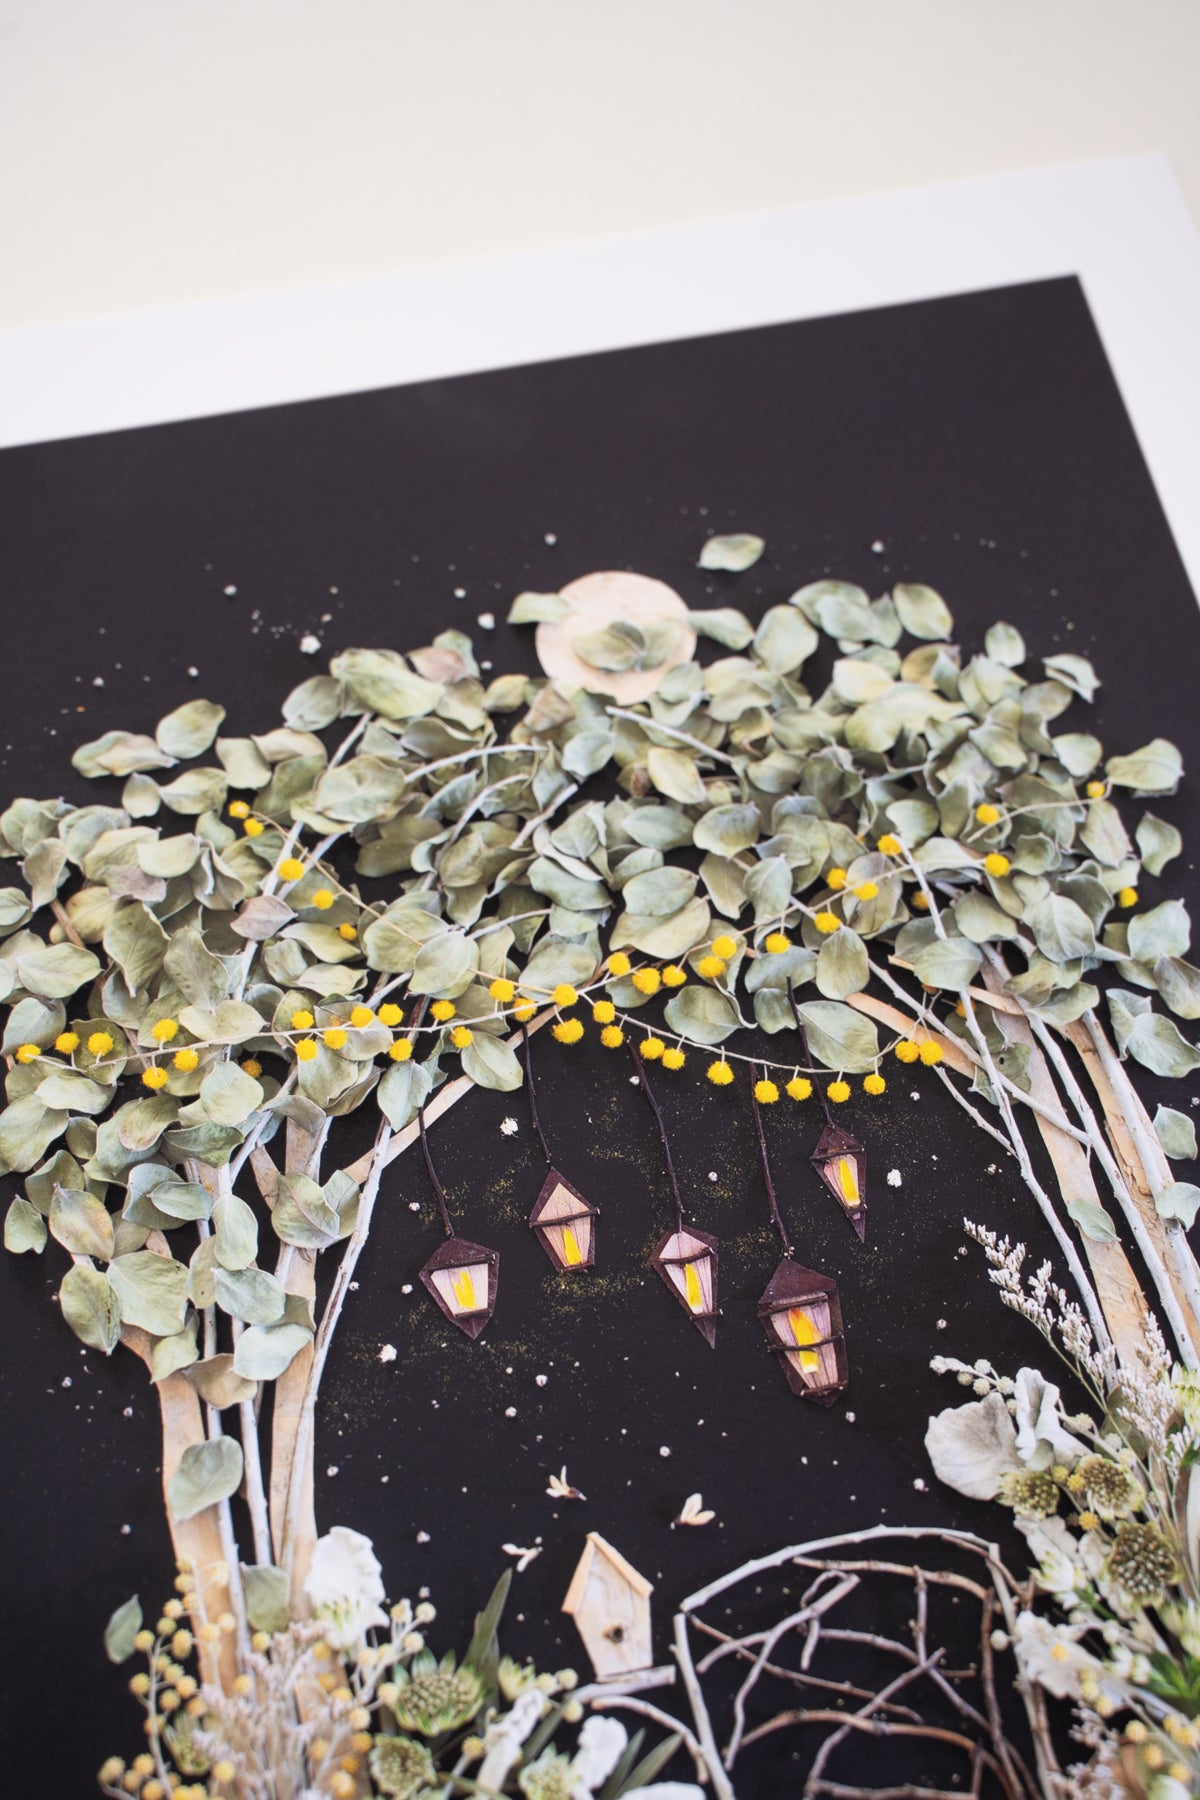 "Moon Garden" Flower Print